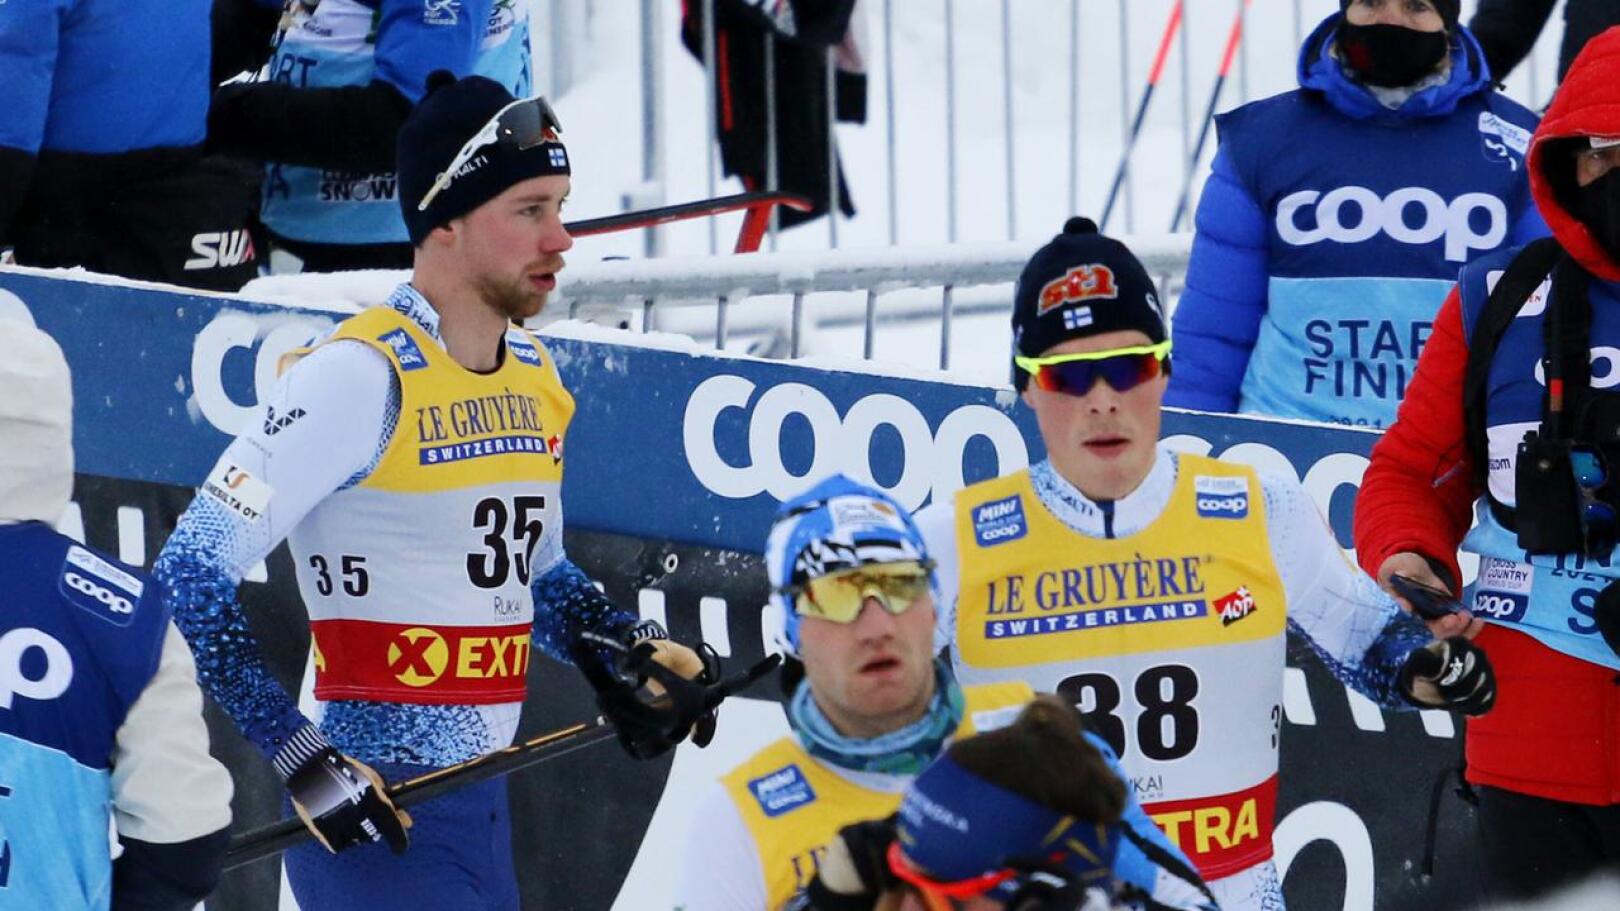 Pohti SkiTeamin Joni Mäki (35) ja Juuso Haarala (38) onnistuivat sprinttikarsinnassa. Mäki oli myöhemmin koko kisan kuudes.